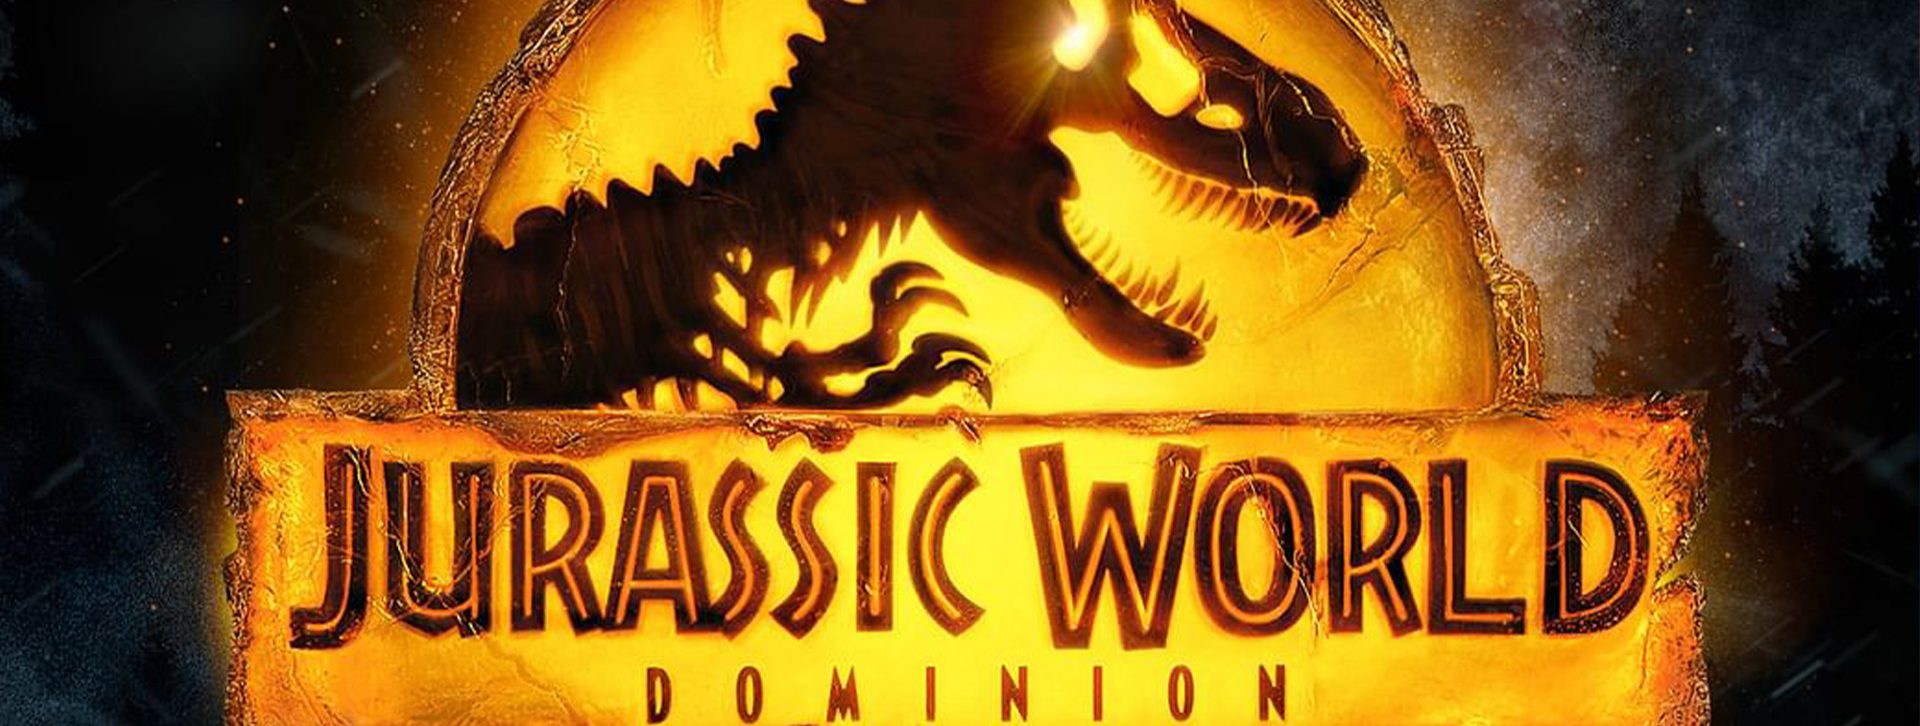 Family Films: Jurassic World Dominion